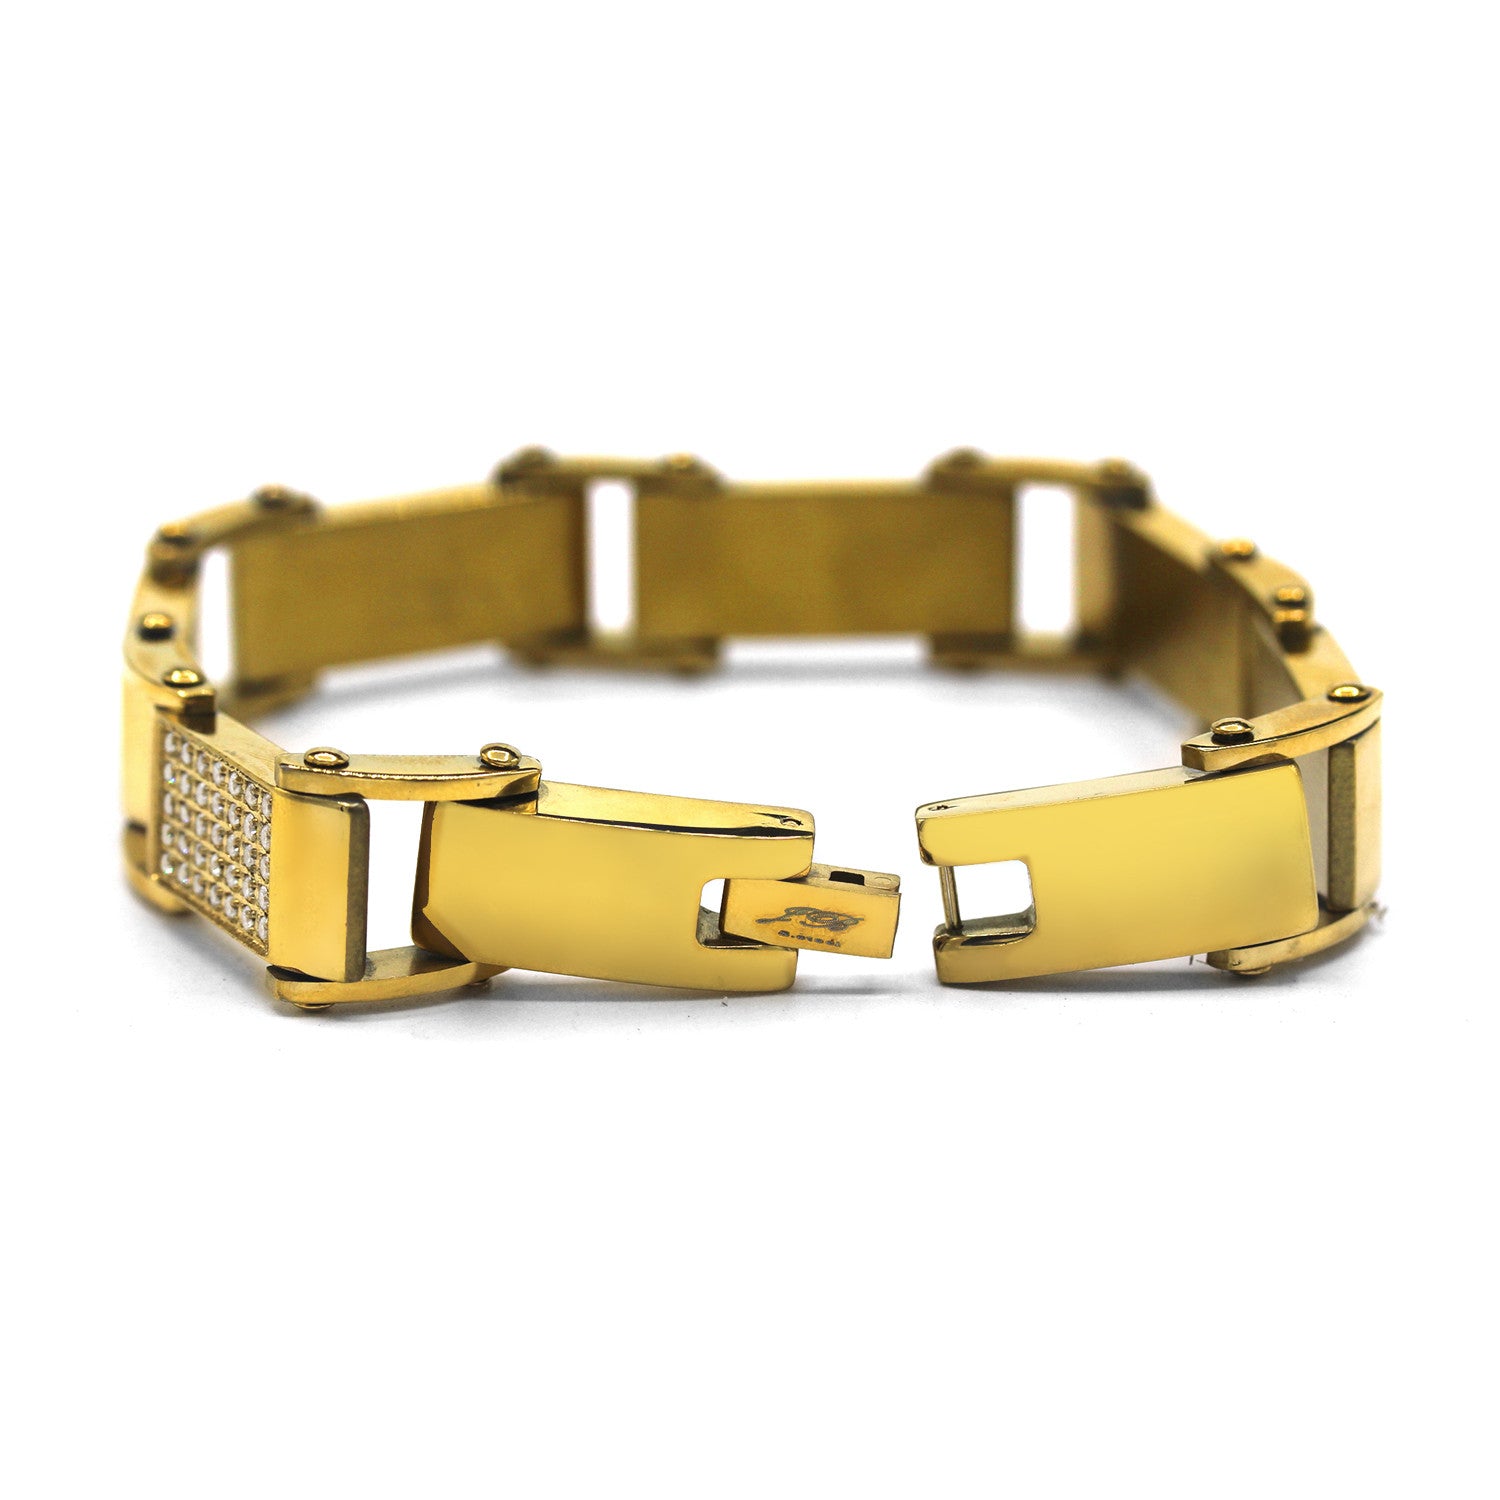 Ornate Men’s Stainless Steel Bracelet Fashion Wrist Band CZ (Gold)